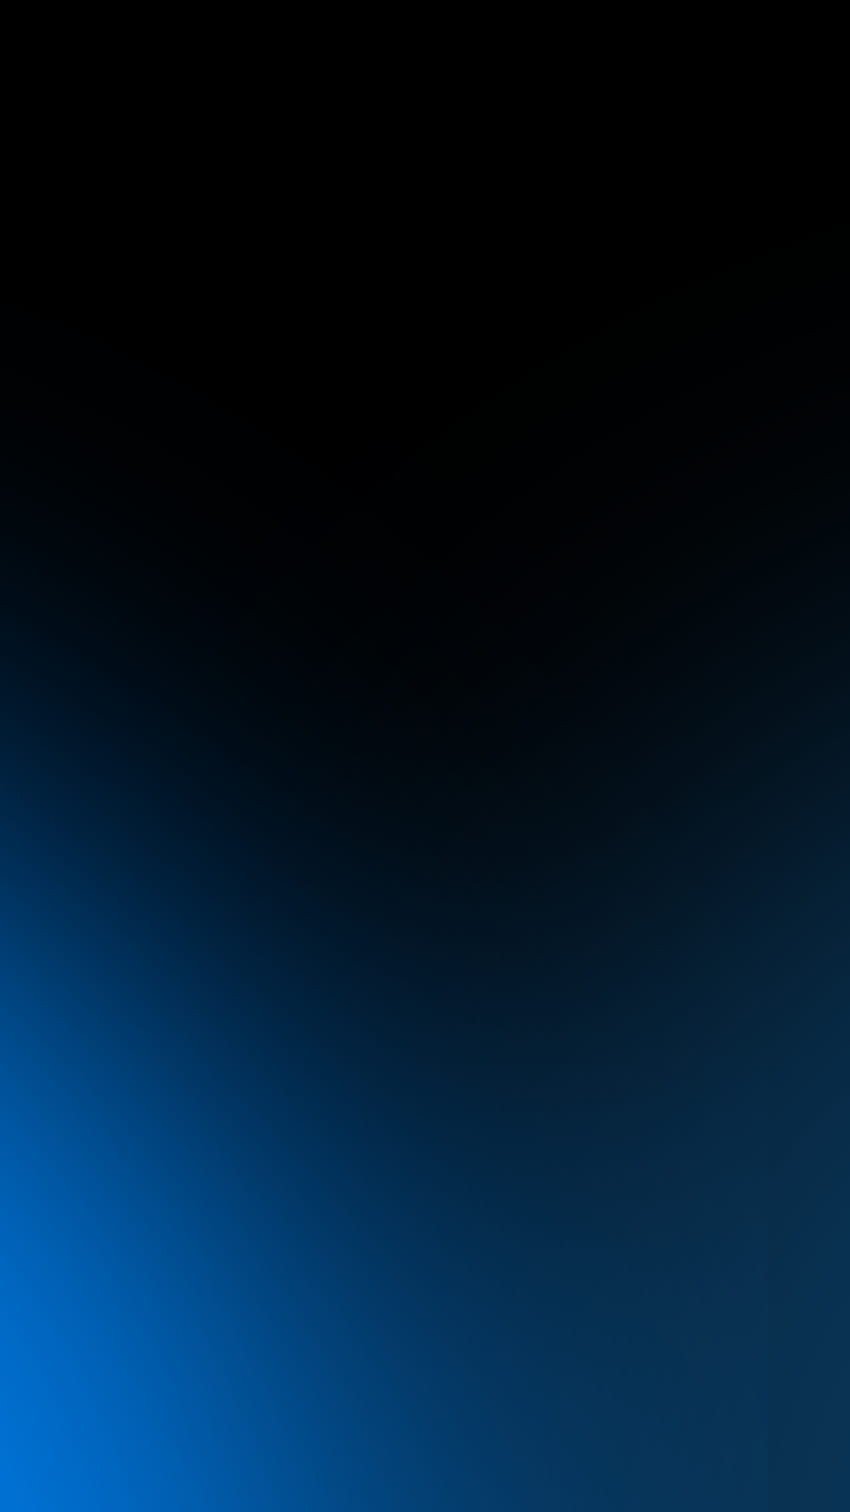  Sky Blue Gradient Background Wallpaper For iPhone  CBEditz